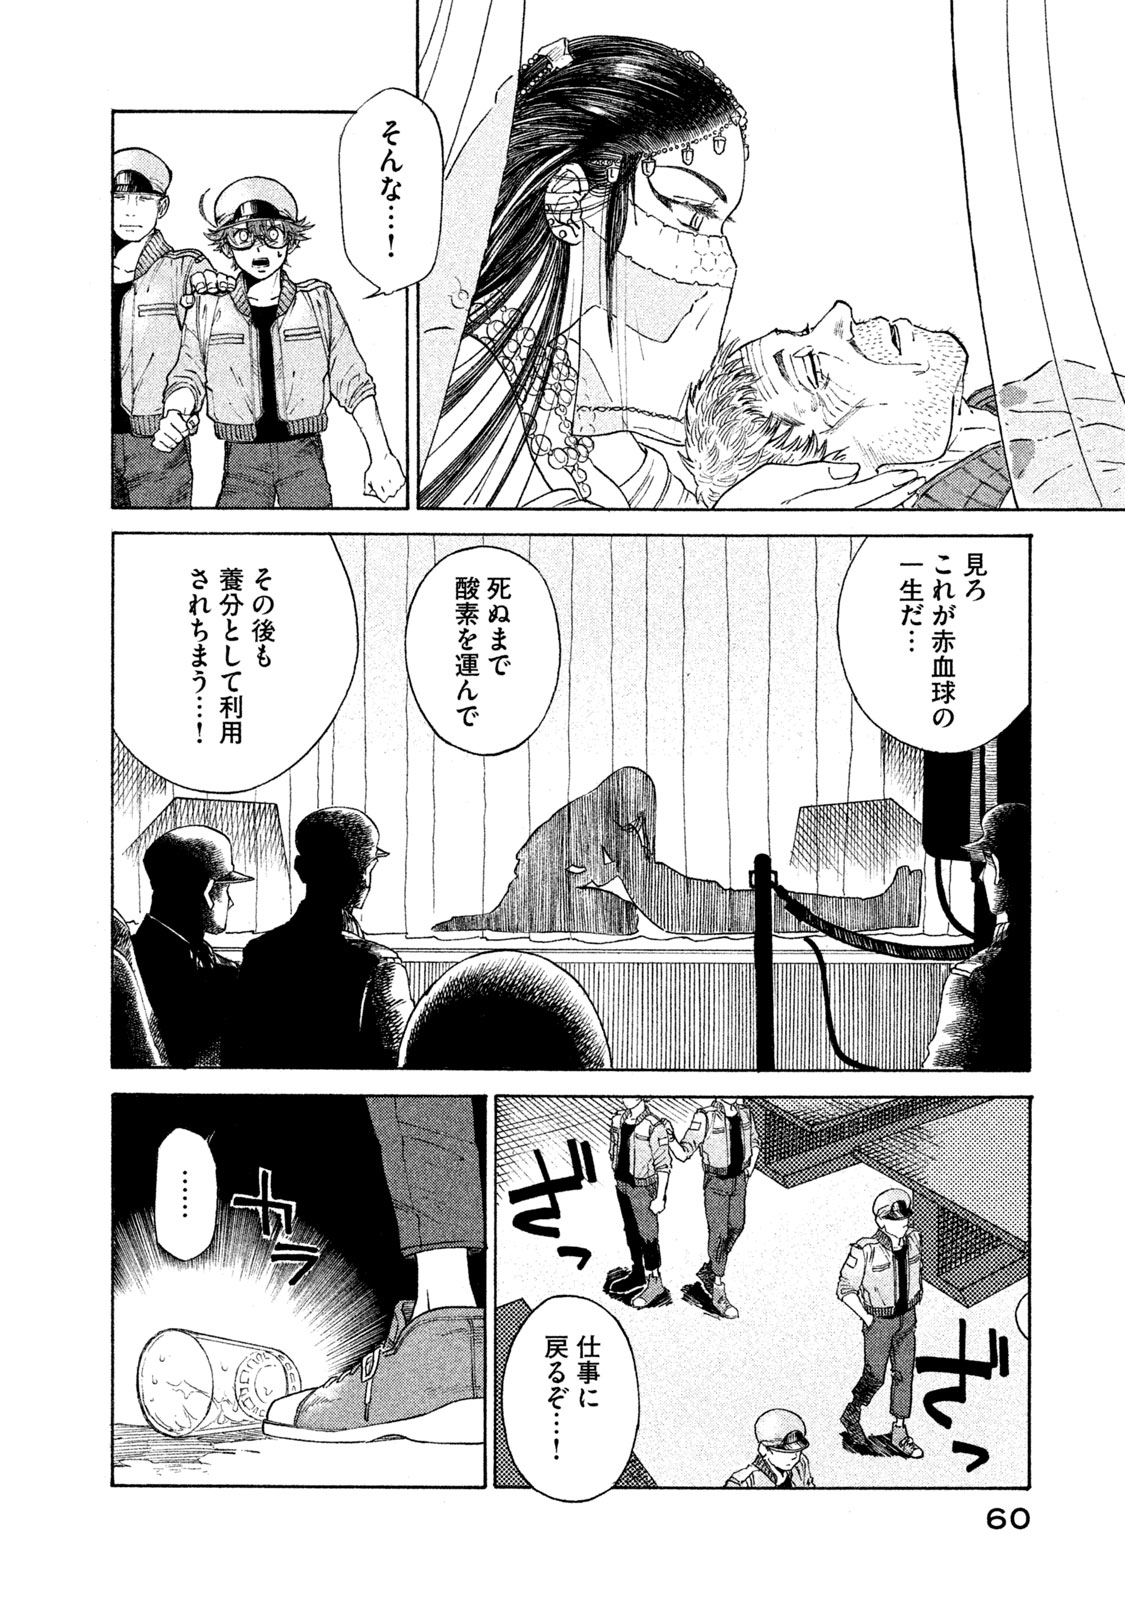 Hataraku Saibou BLACK - Chapter 2 - Page 24